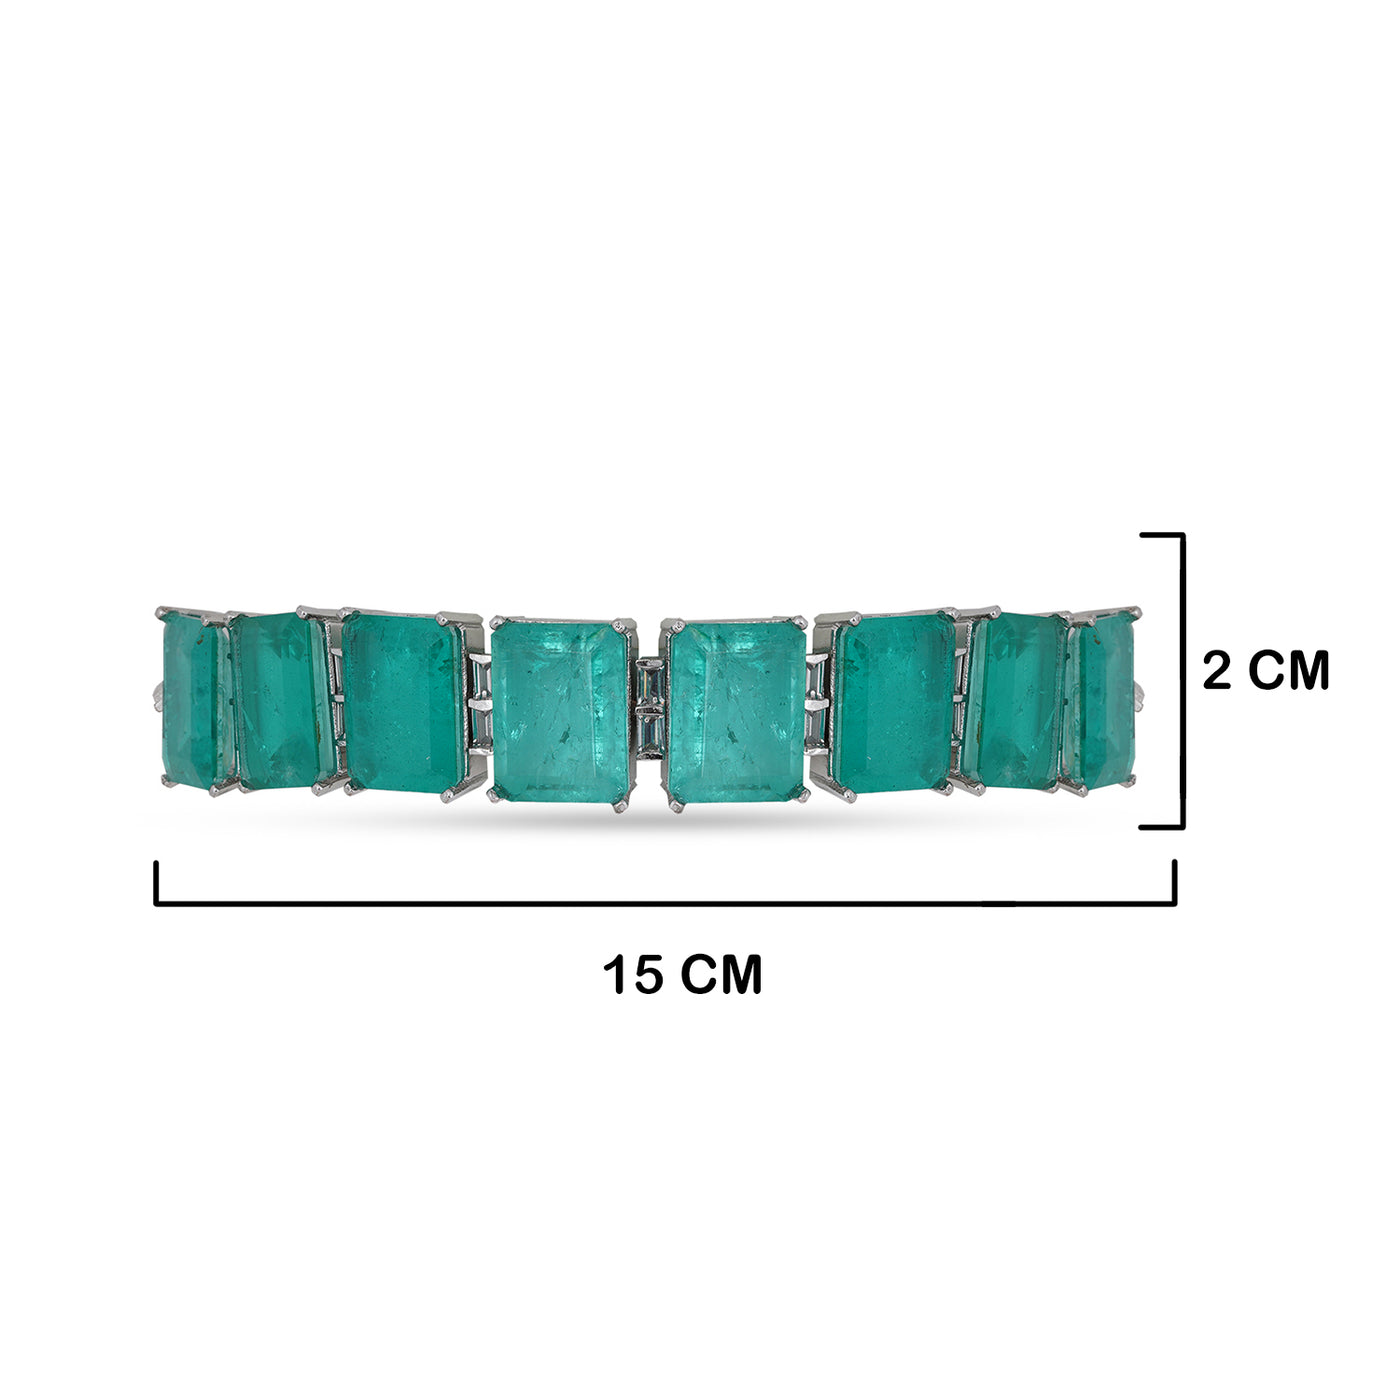 Aqua Blue Single Strand Bracelet with measurements in cm. 2cm by 15cm.